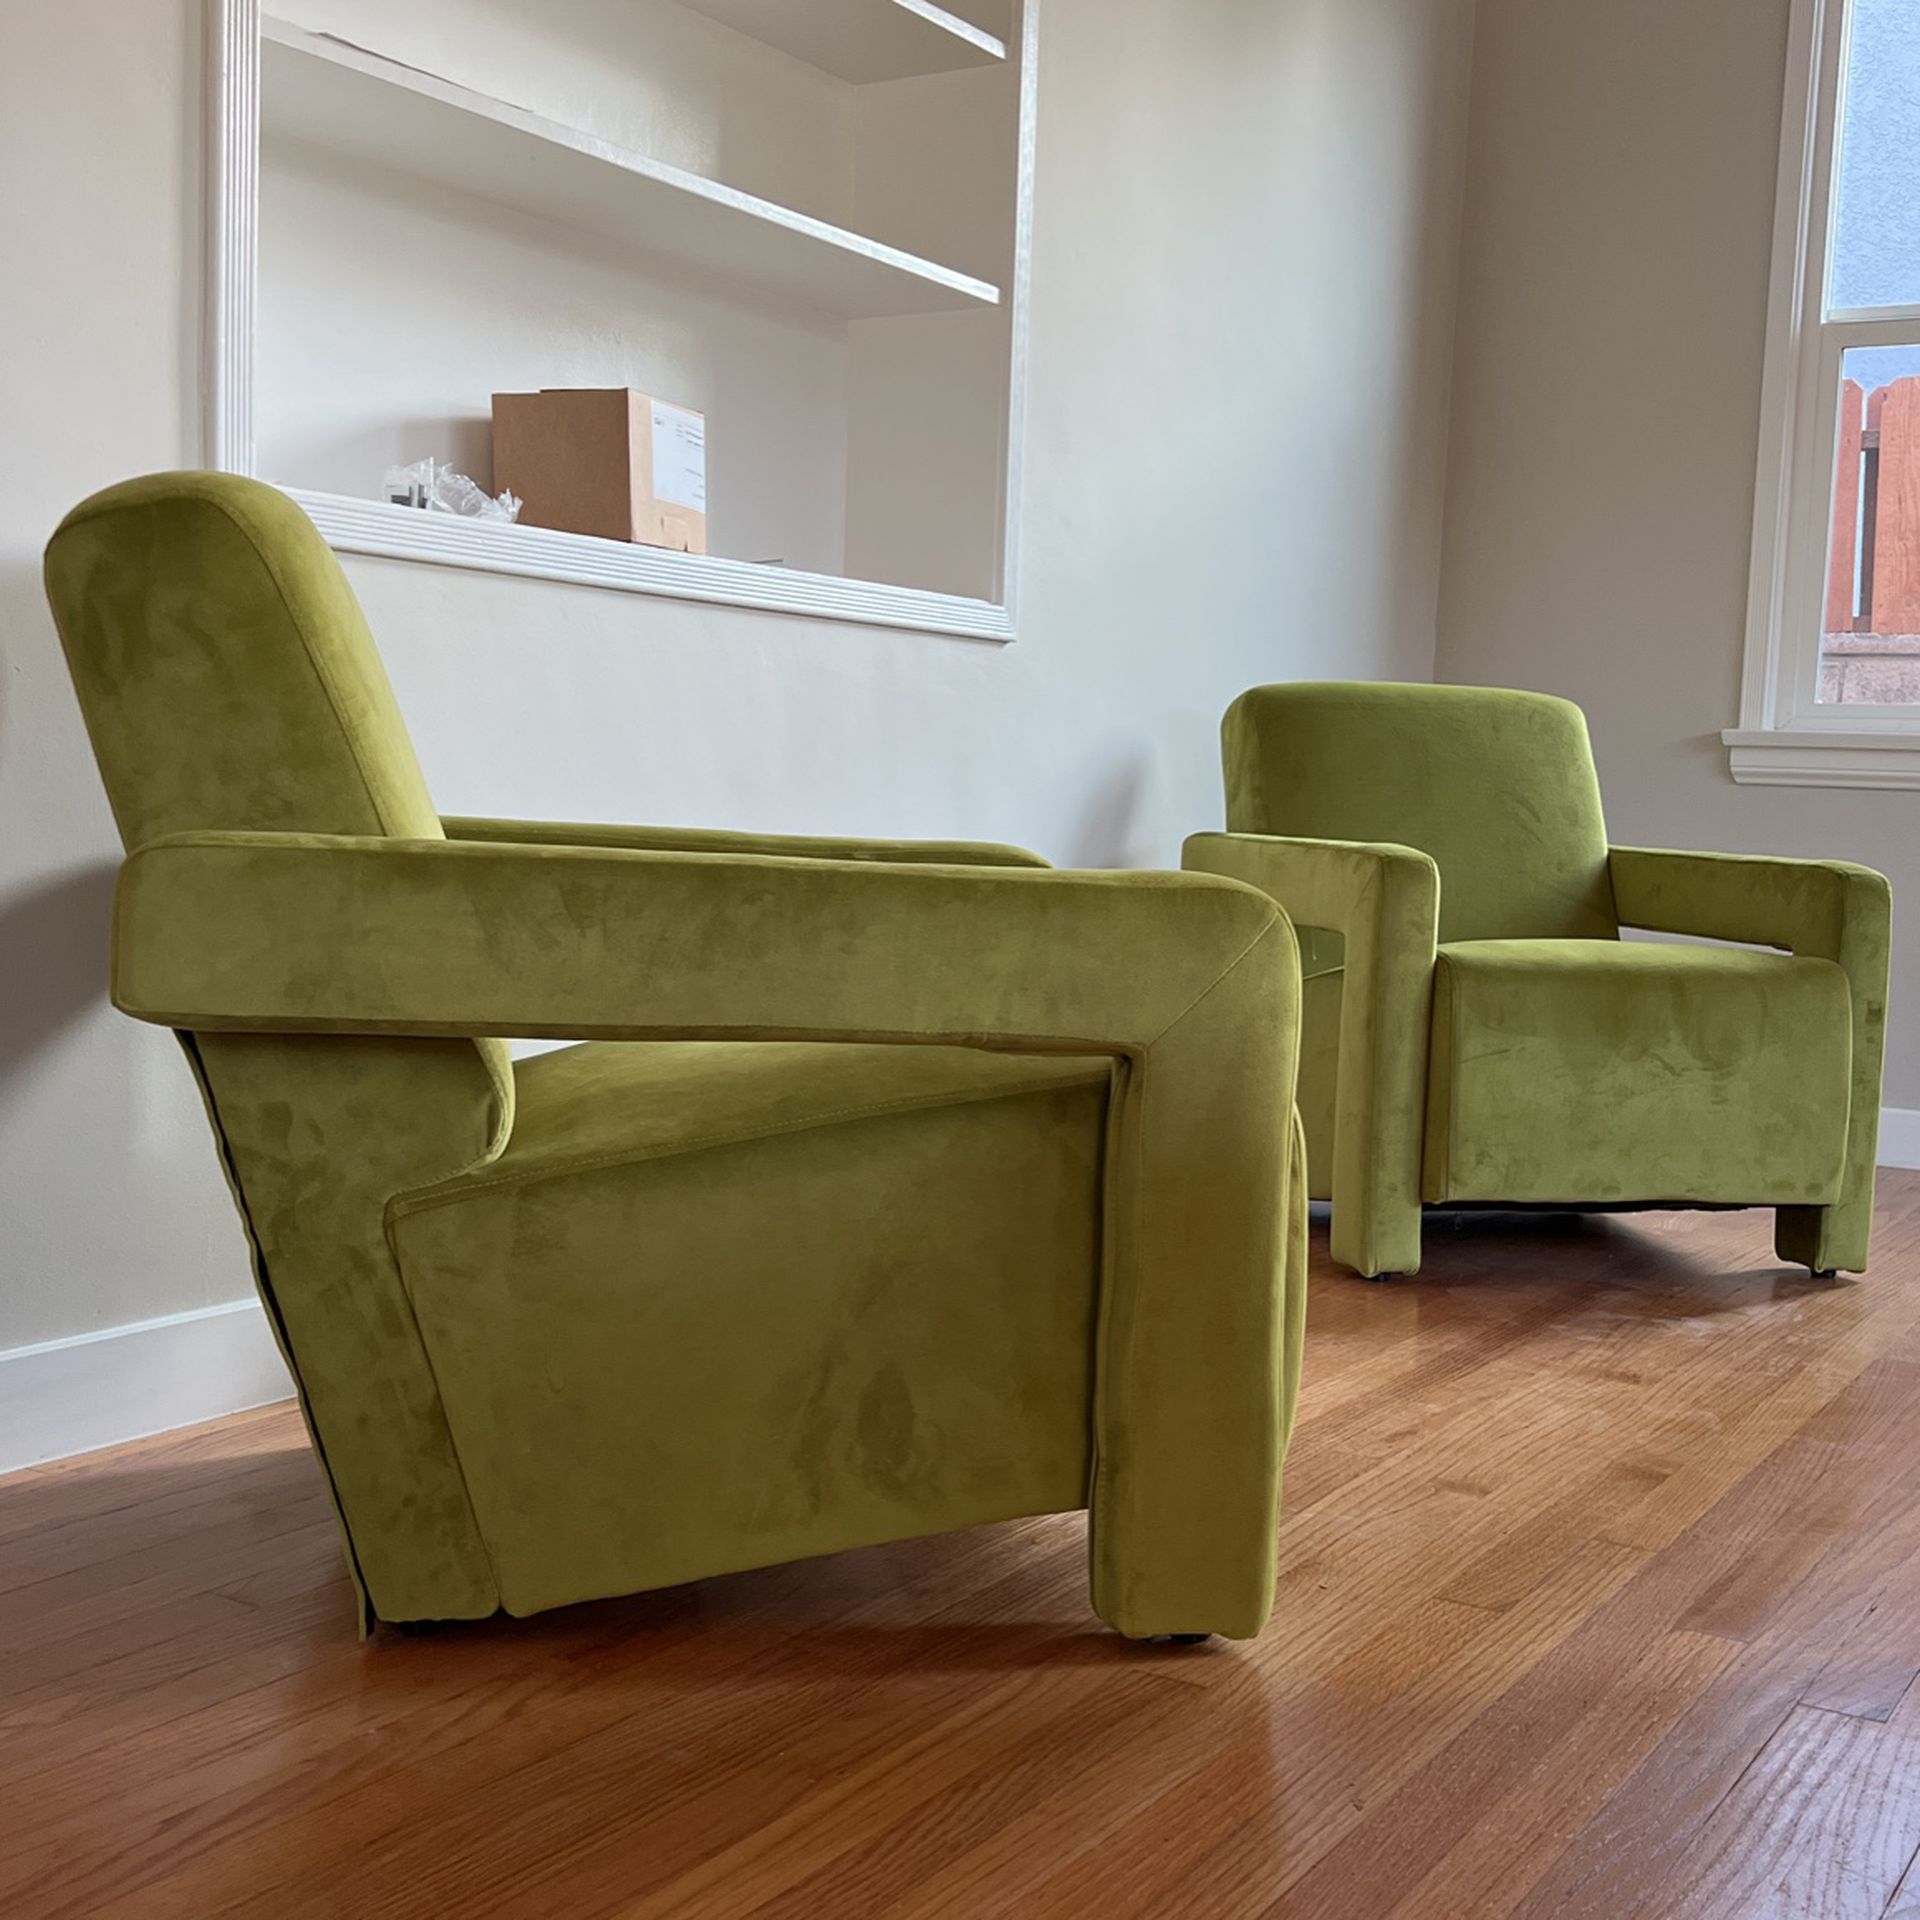 2 Accent Chairs - Olive velvet Midcentury modern